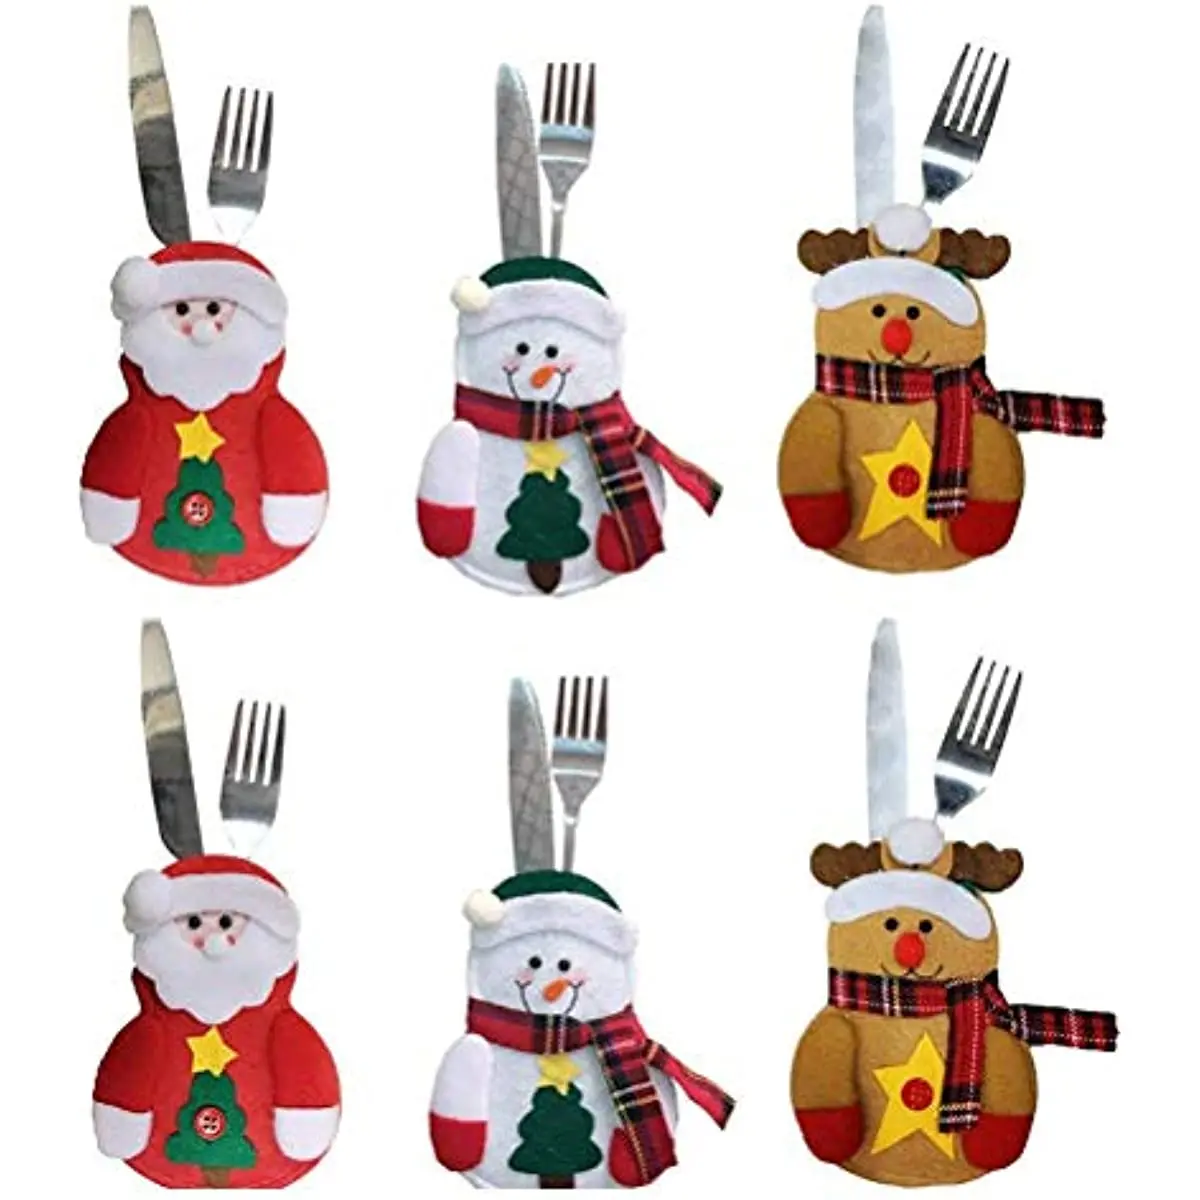 

6pcs Kitchen Suit Silverware Holders Pockets Knifes Forks Bag Snowman Santa Claus Elk Christmas Party Decoration for Christmas